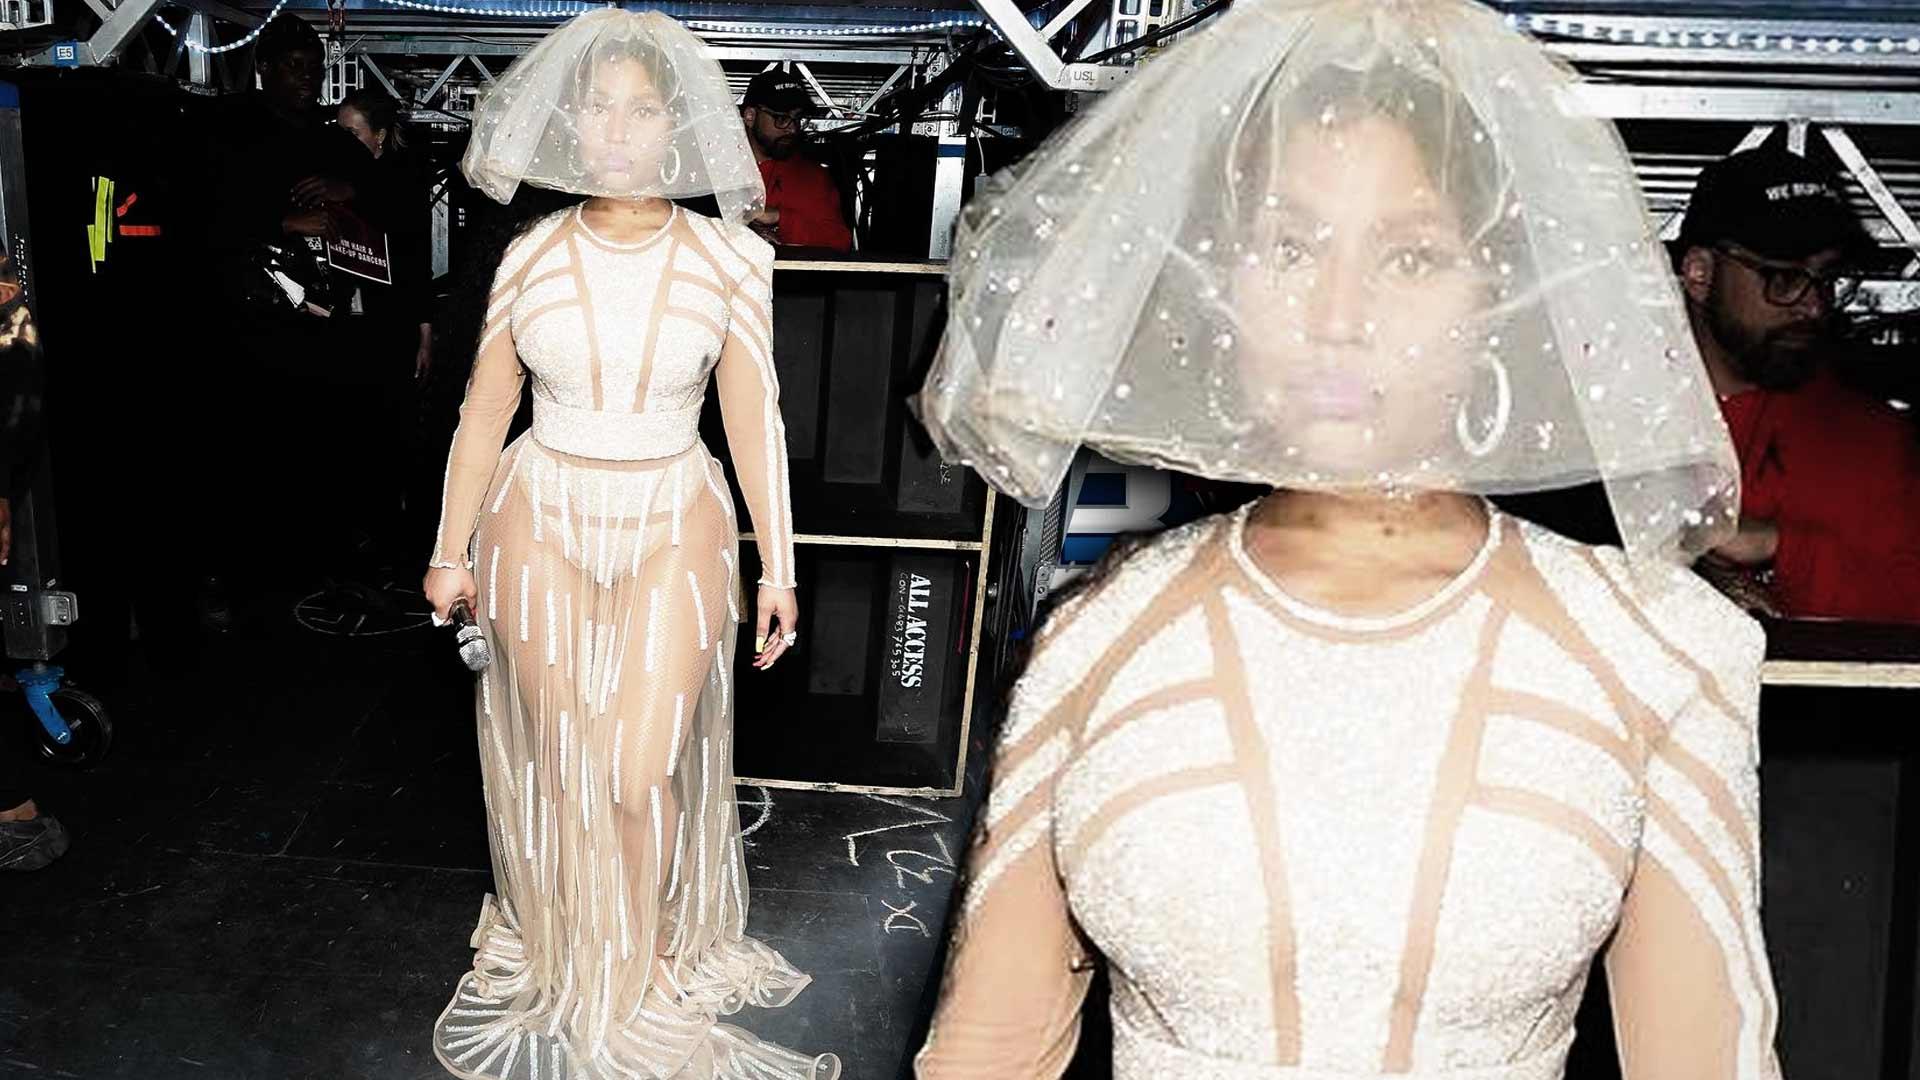 Nicki Minaj Continues to Tease Marriage Rumors with Bridal Dress at Concert